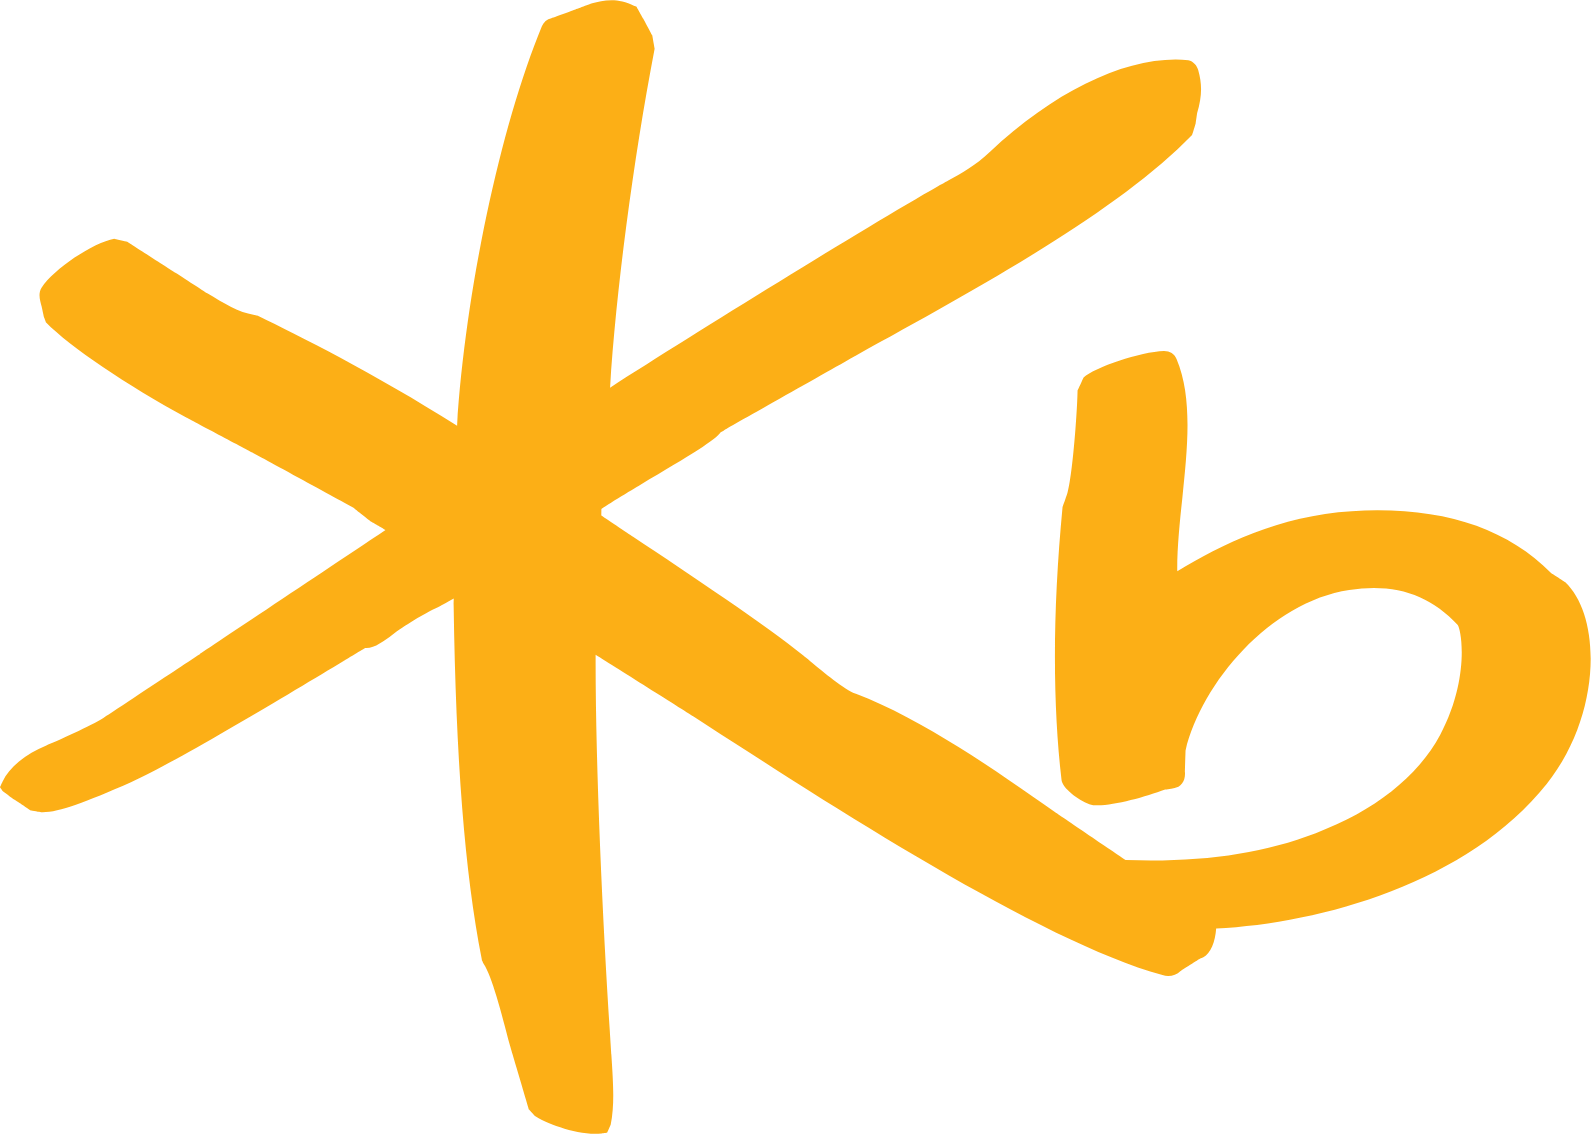 KB Financial Group logo (PNG transparent)